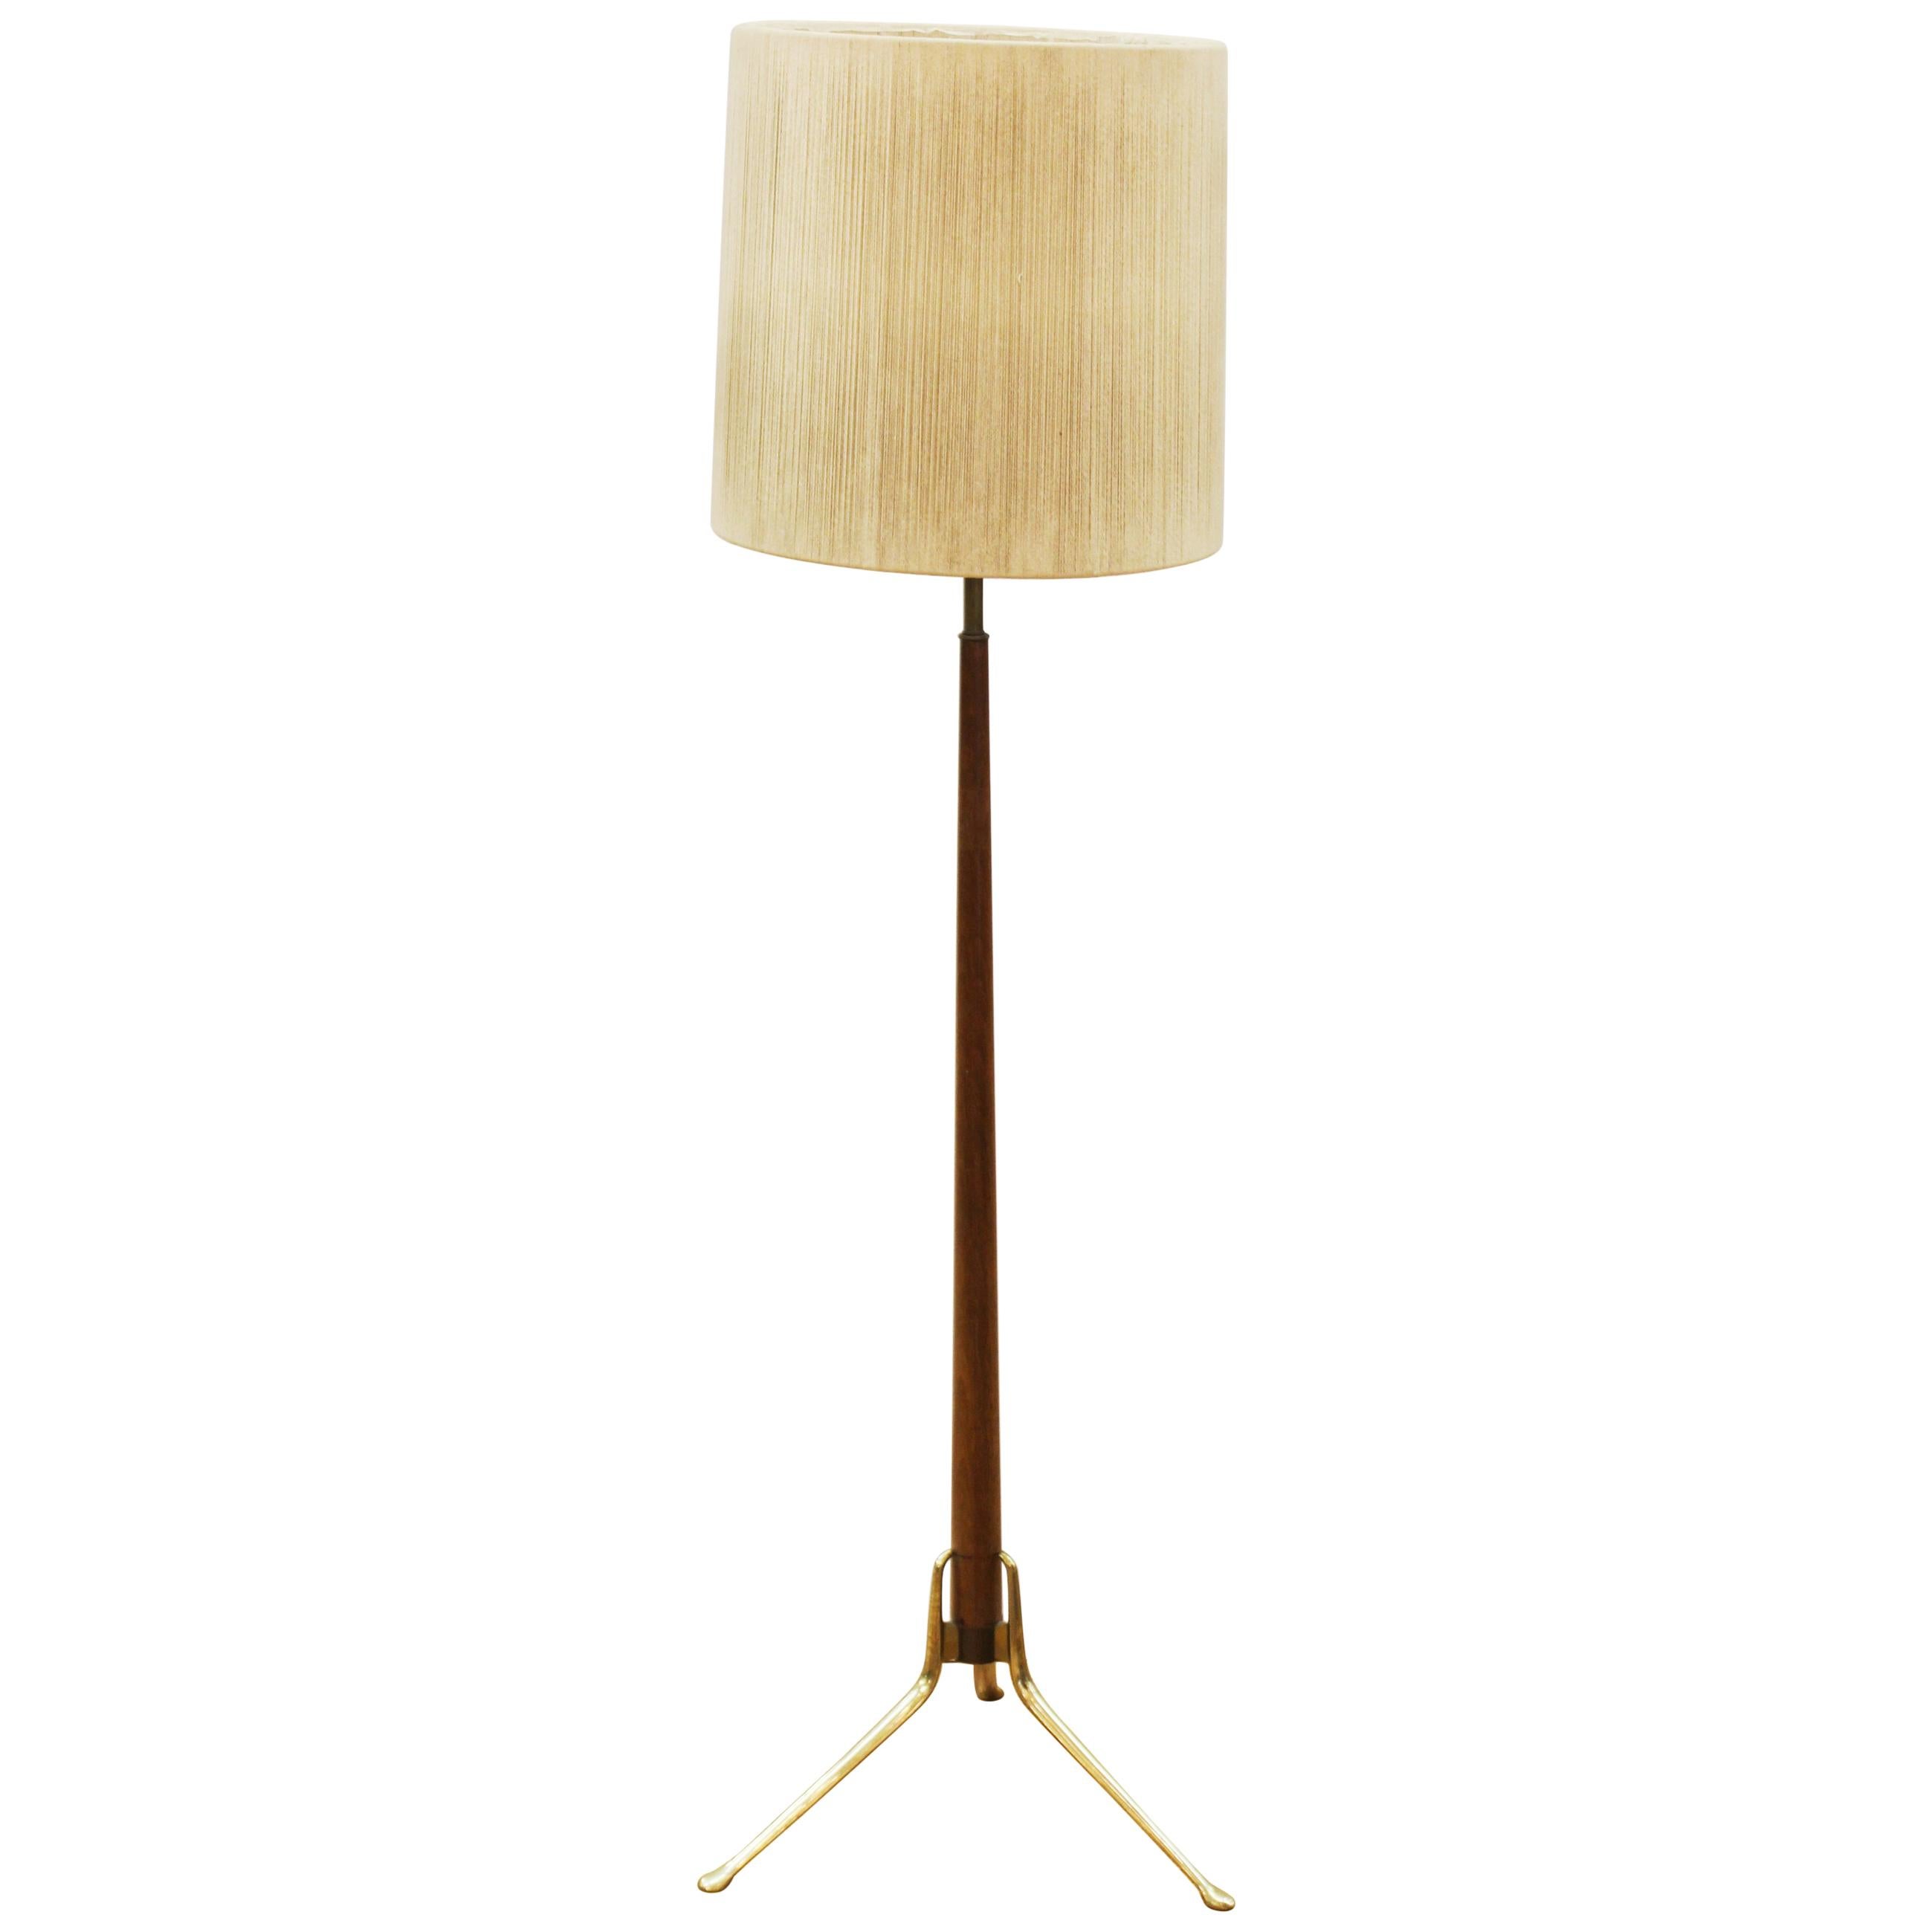 Mid-Century Modern Floor Lamp with Tripod Base